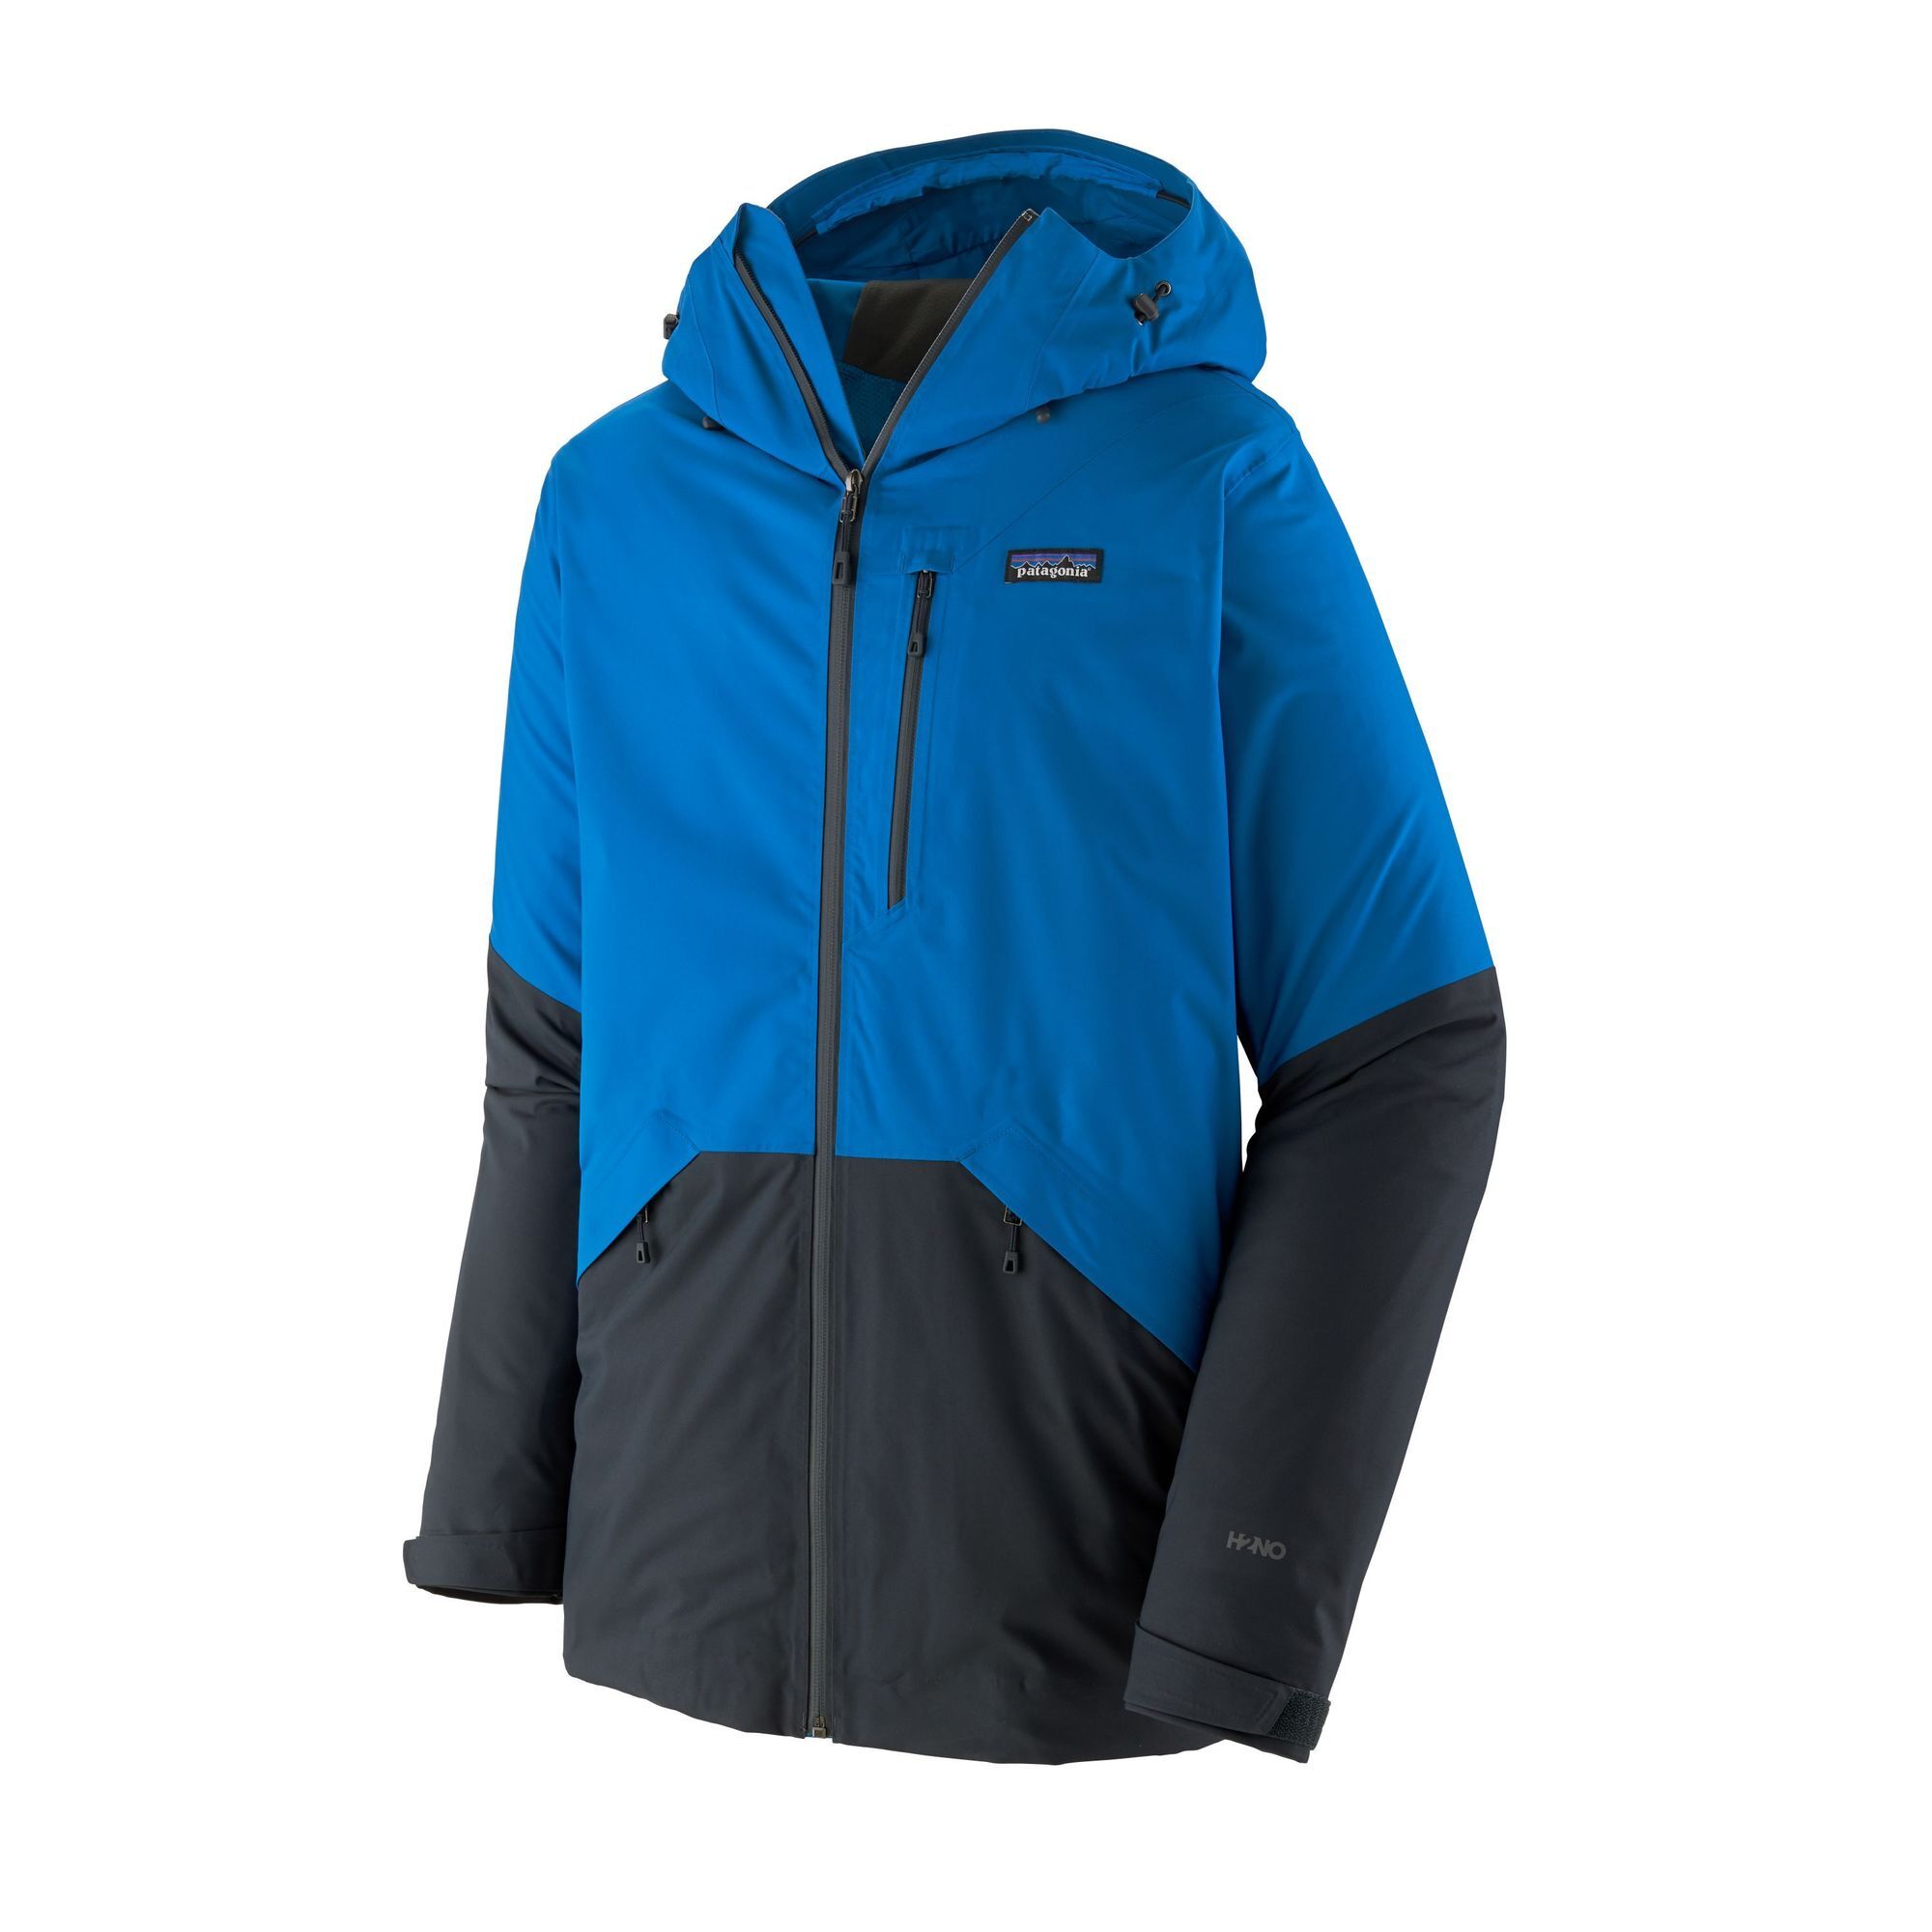 Patagonia - Snowshot Jacket - Chaqueta de esquí - Hombre